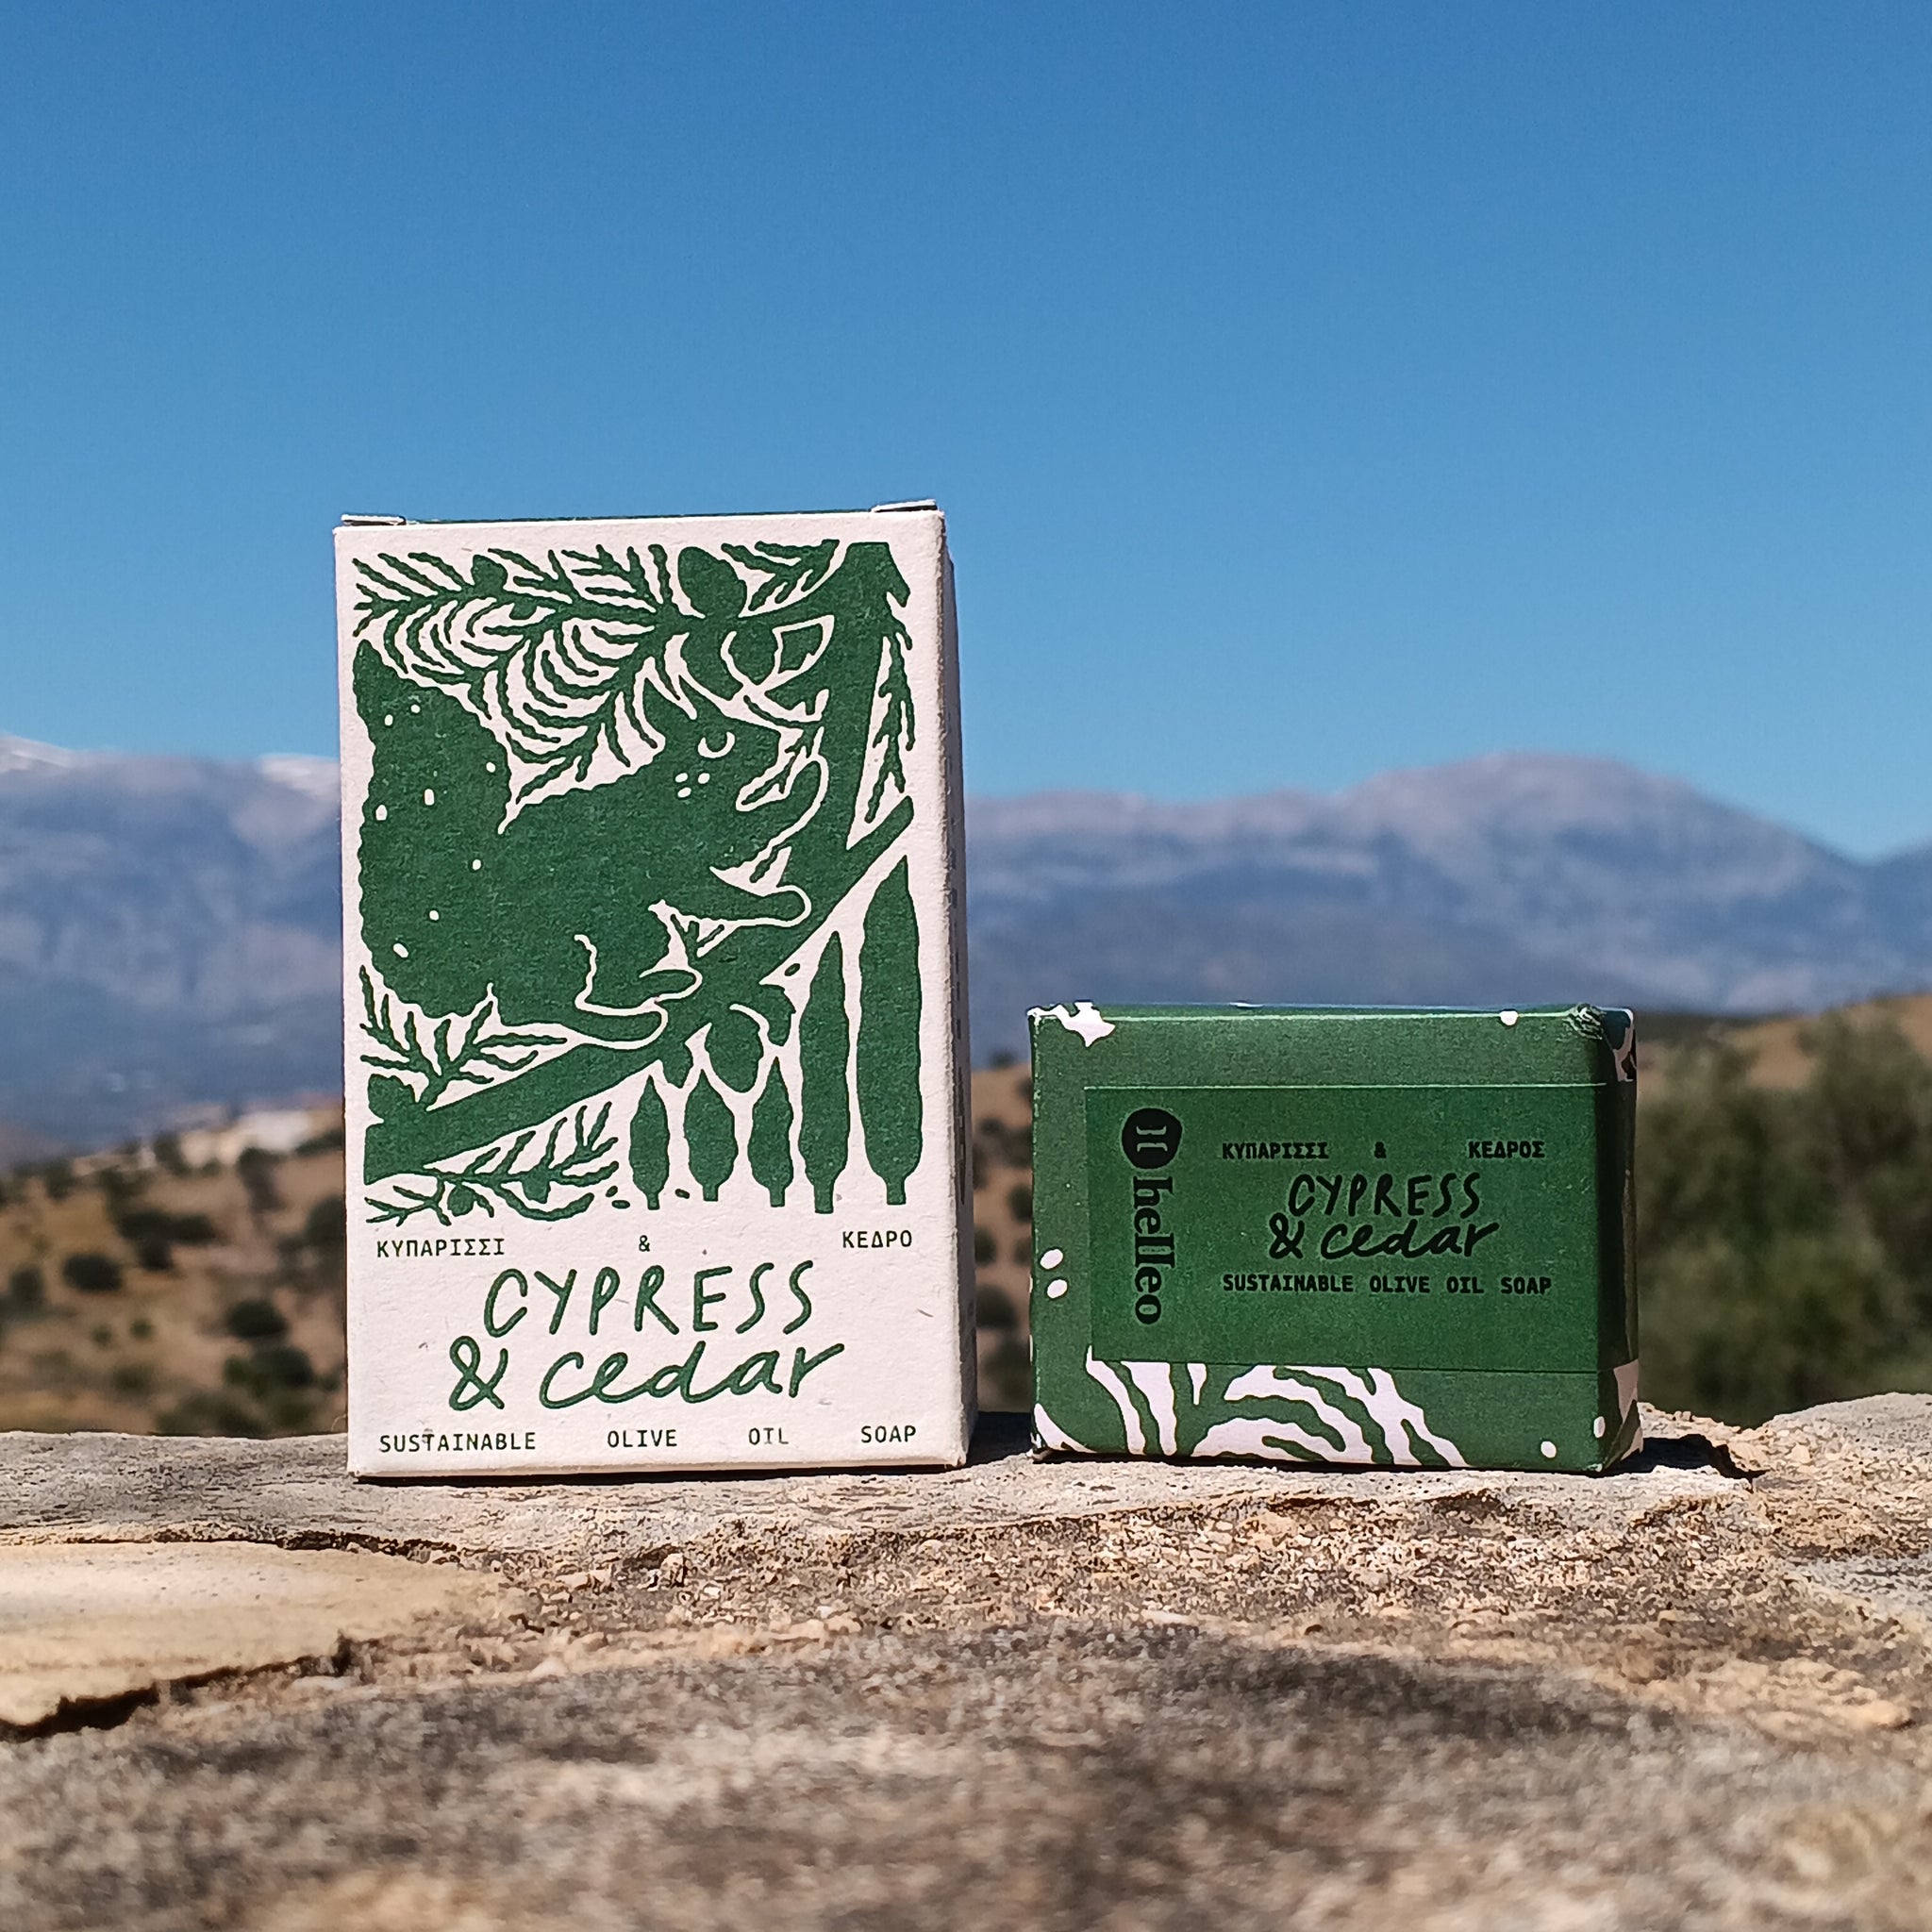 "Cypress & Cedar" Handmade soap by Helleo